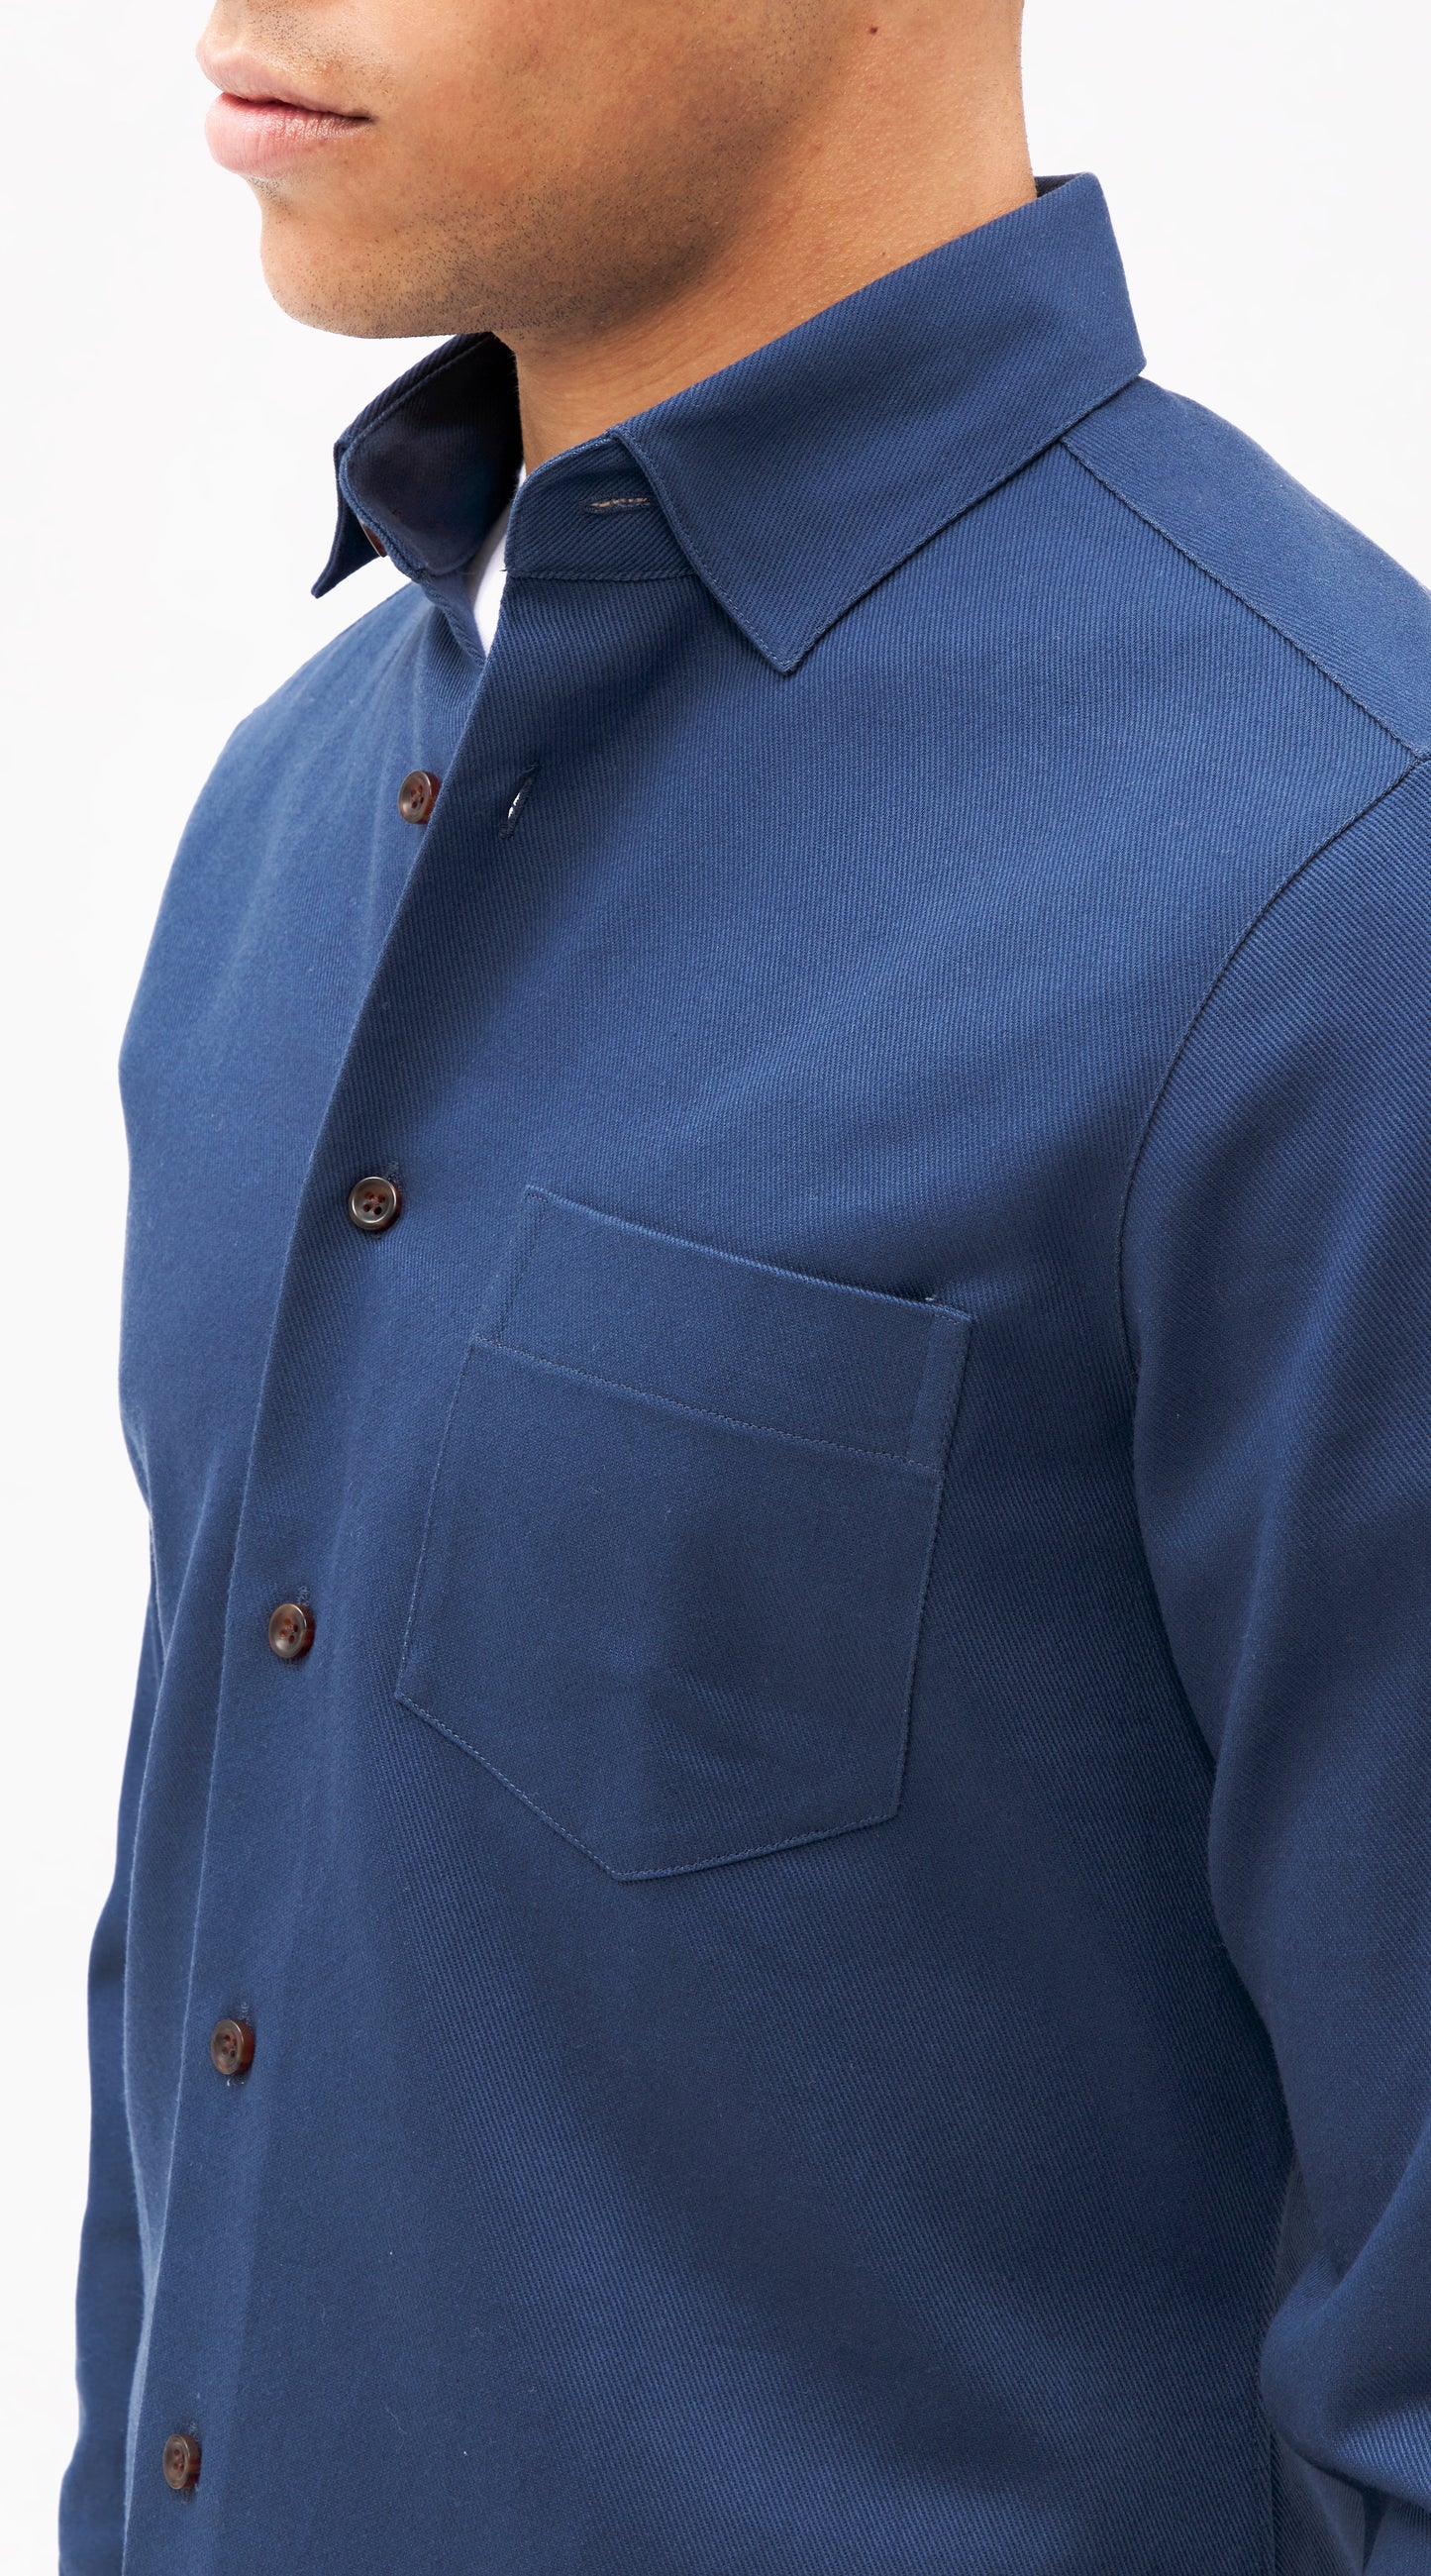 Navy Blue Japanese Cotton Shirt